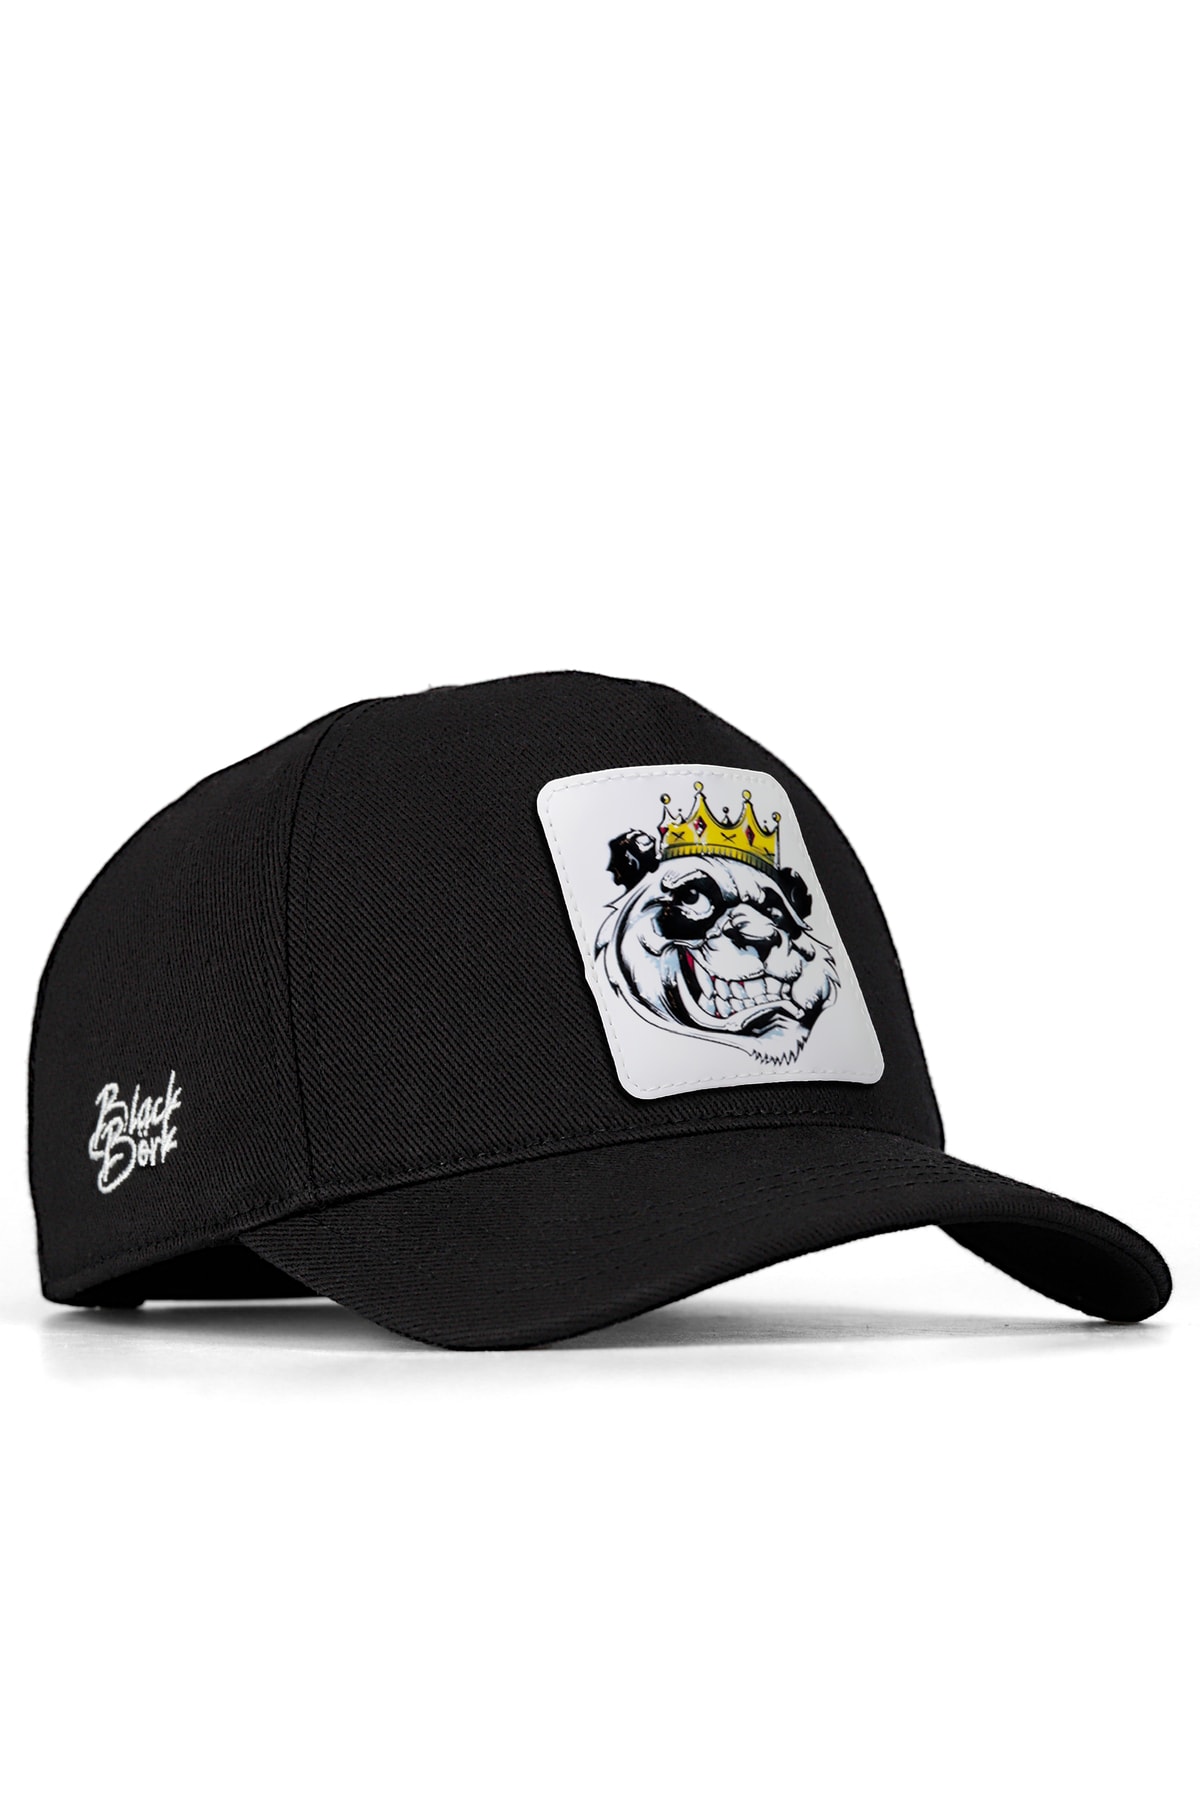 BlackBörk V1 Unisex Baseball Panda2 Hayvan Logolu Siyah Cap Şapka